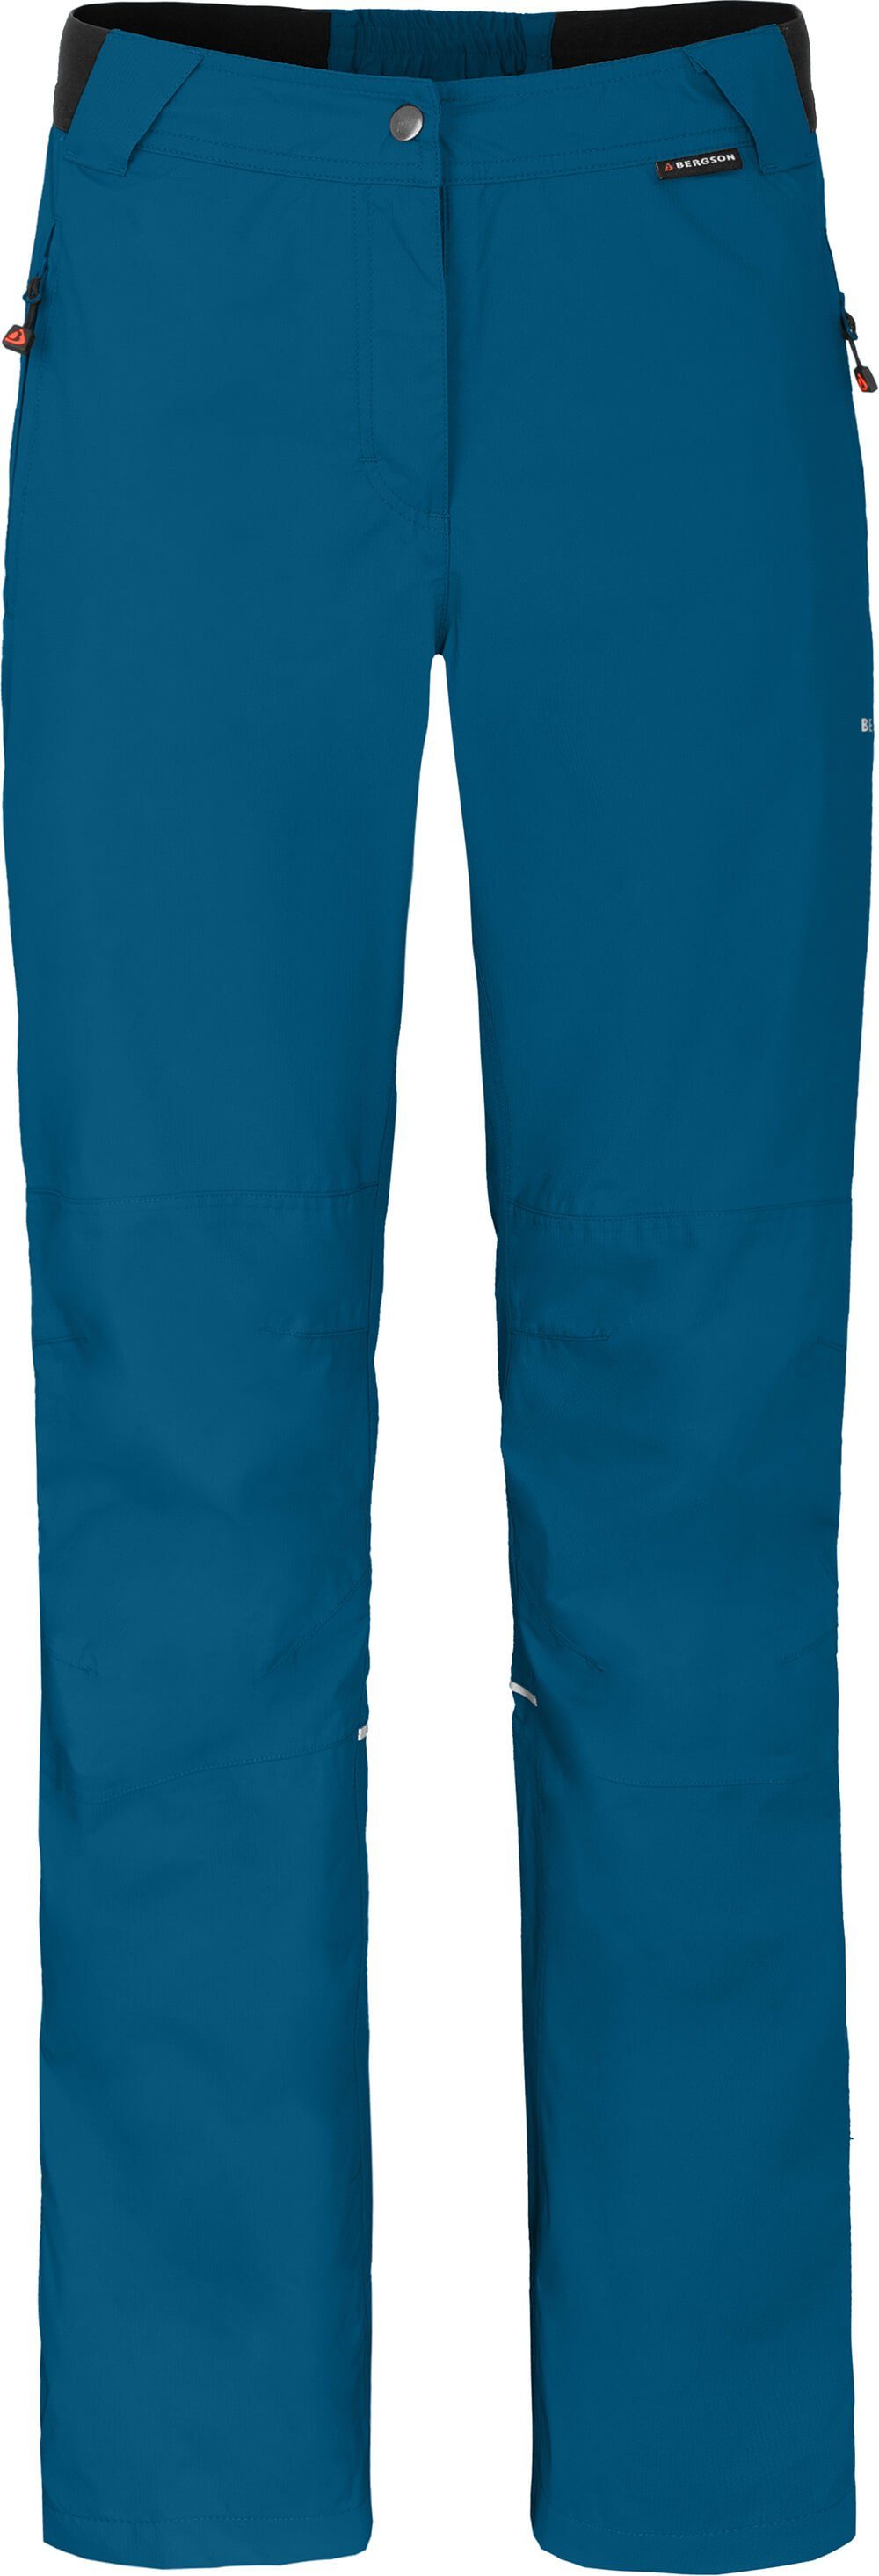 LYNDE Normalgrößen, Damen Bergson blau COMFORT Regenhose Saphir Regenhose, Wassersäule, Netzfutter, 12000 mm